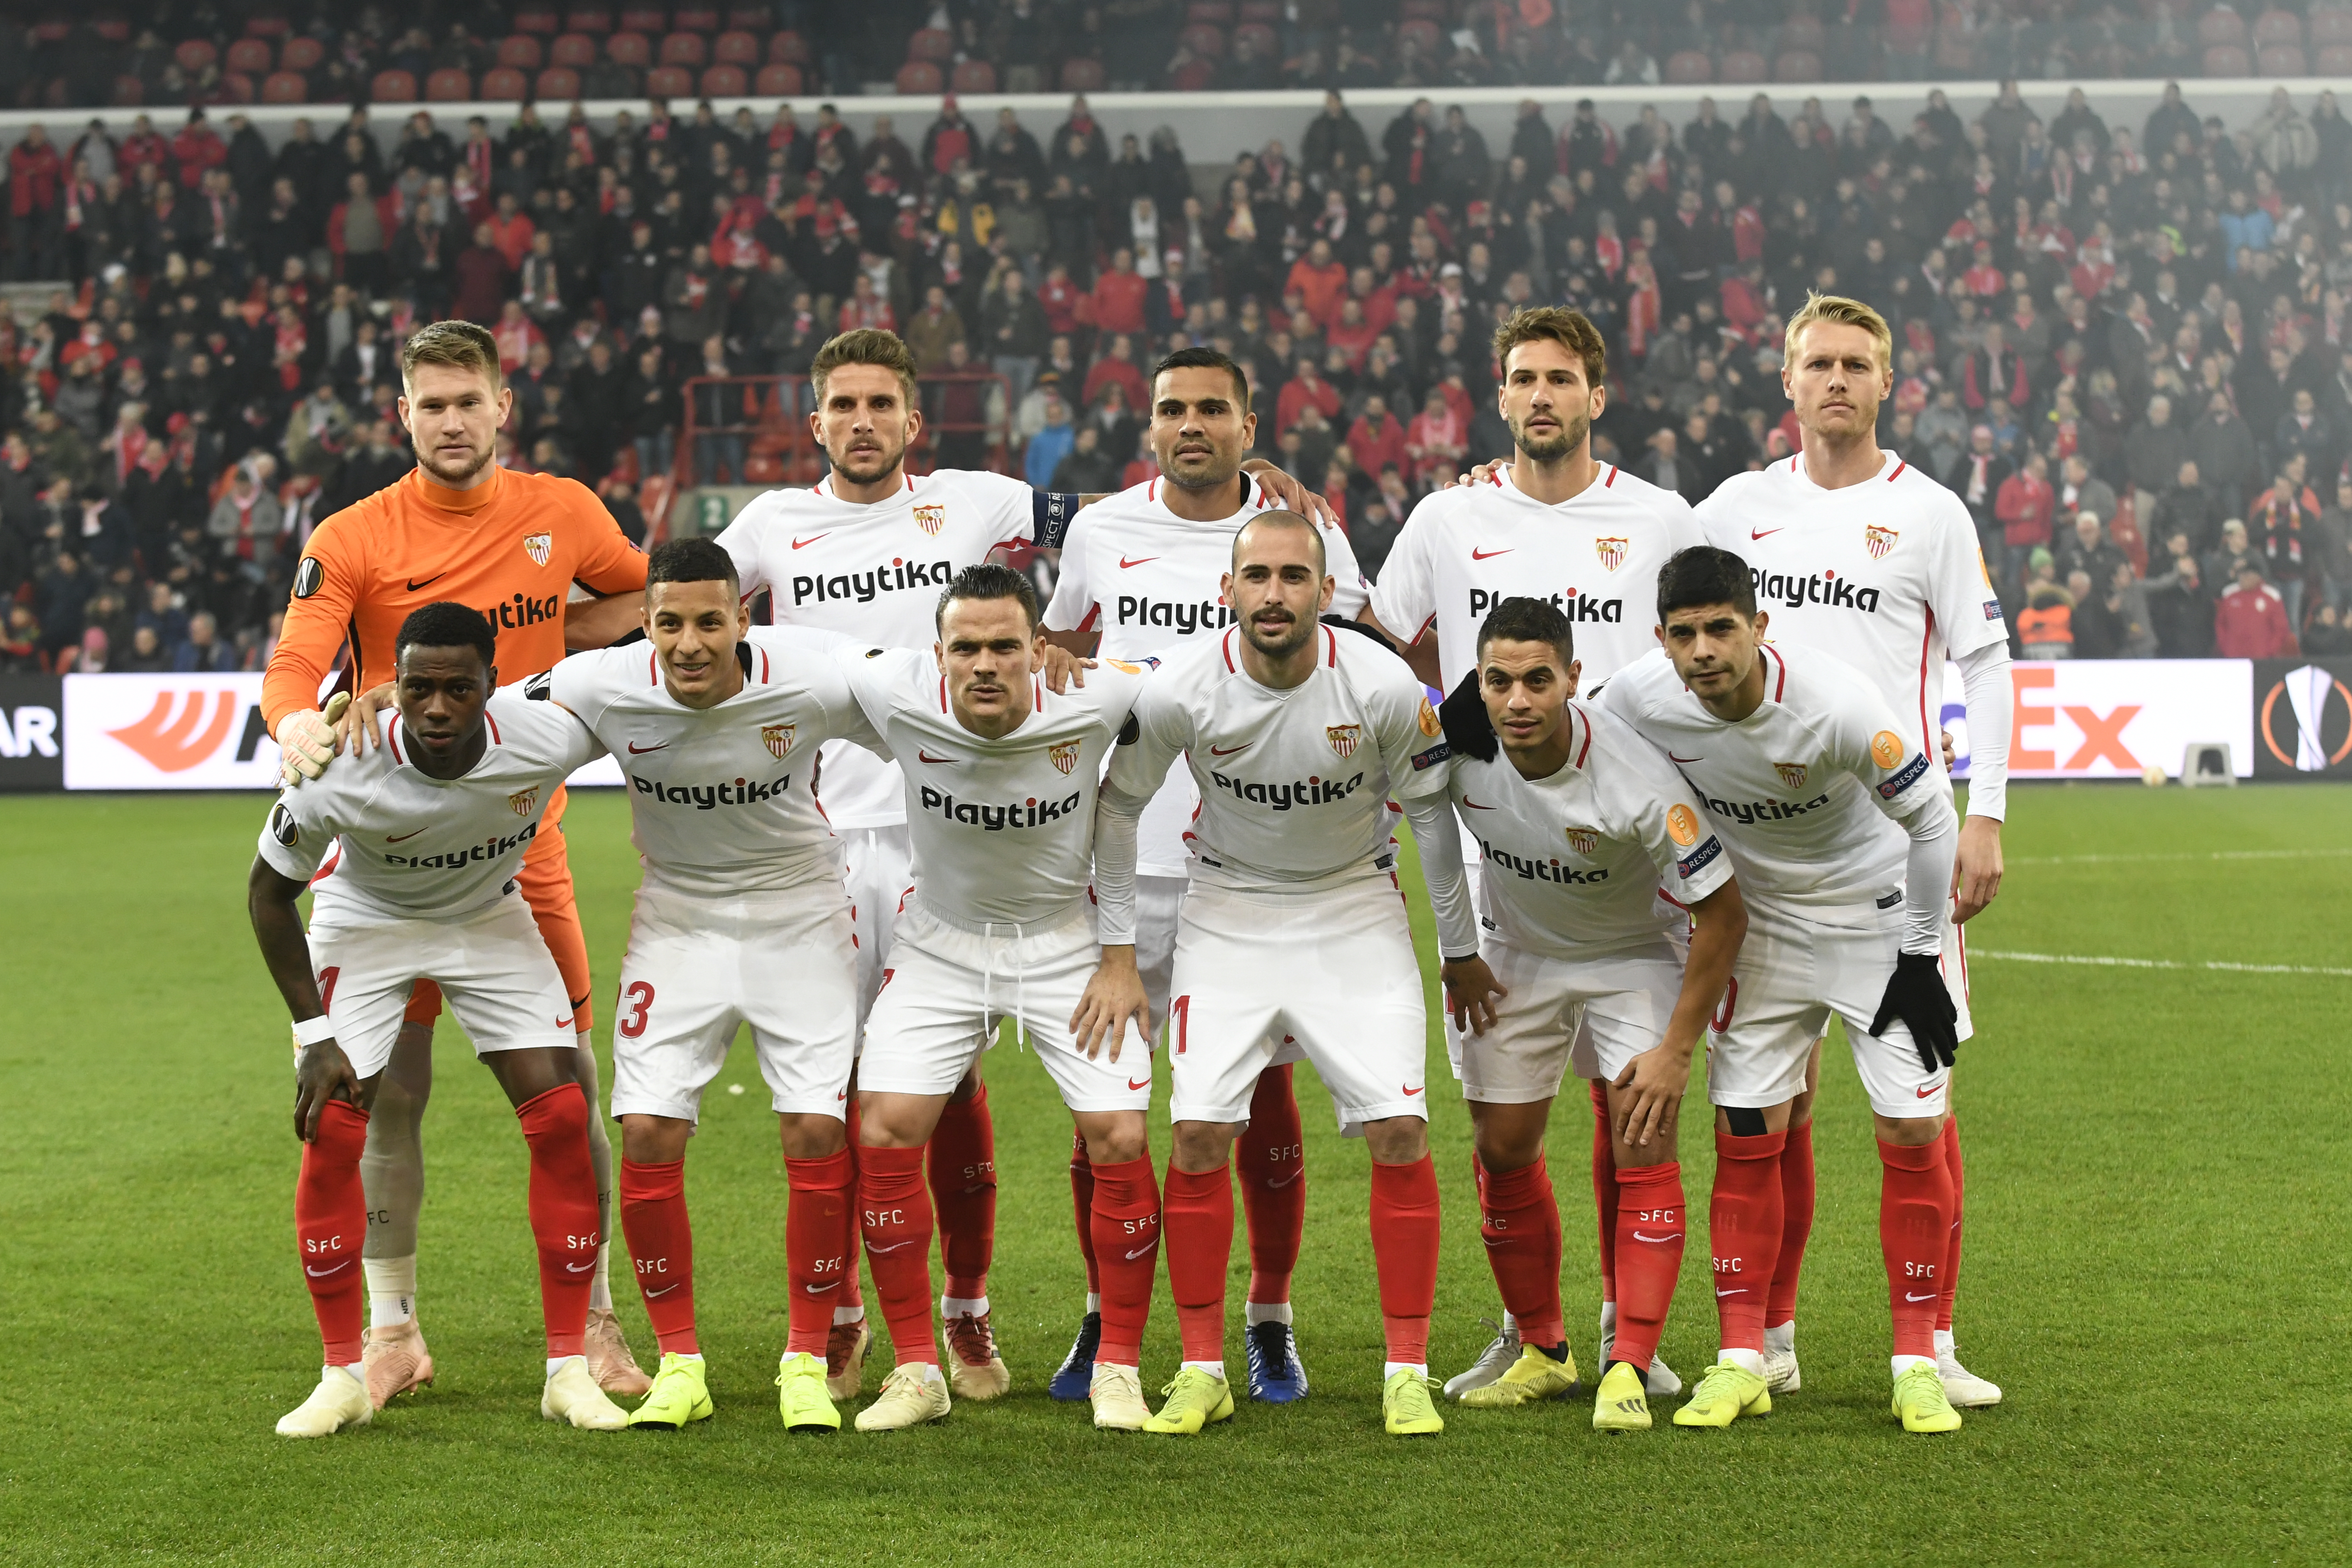 Sevilla FC's starting XI against Standard Liege